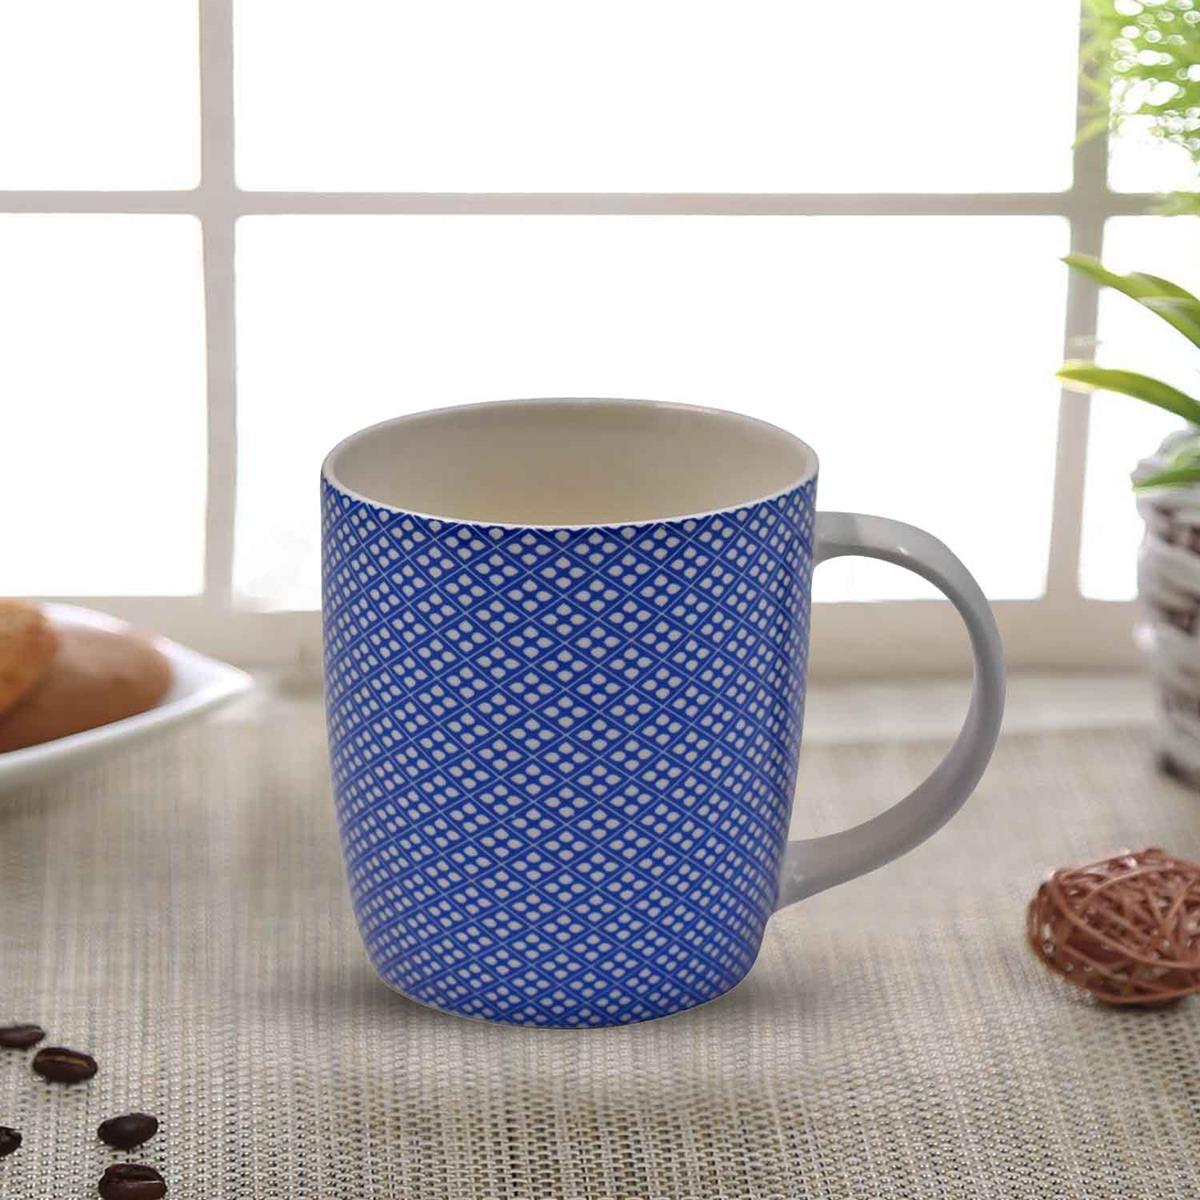 Ceramic Coffee or Tea Mug with handle - 325ml (3525-D)